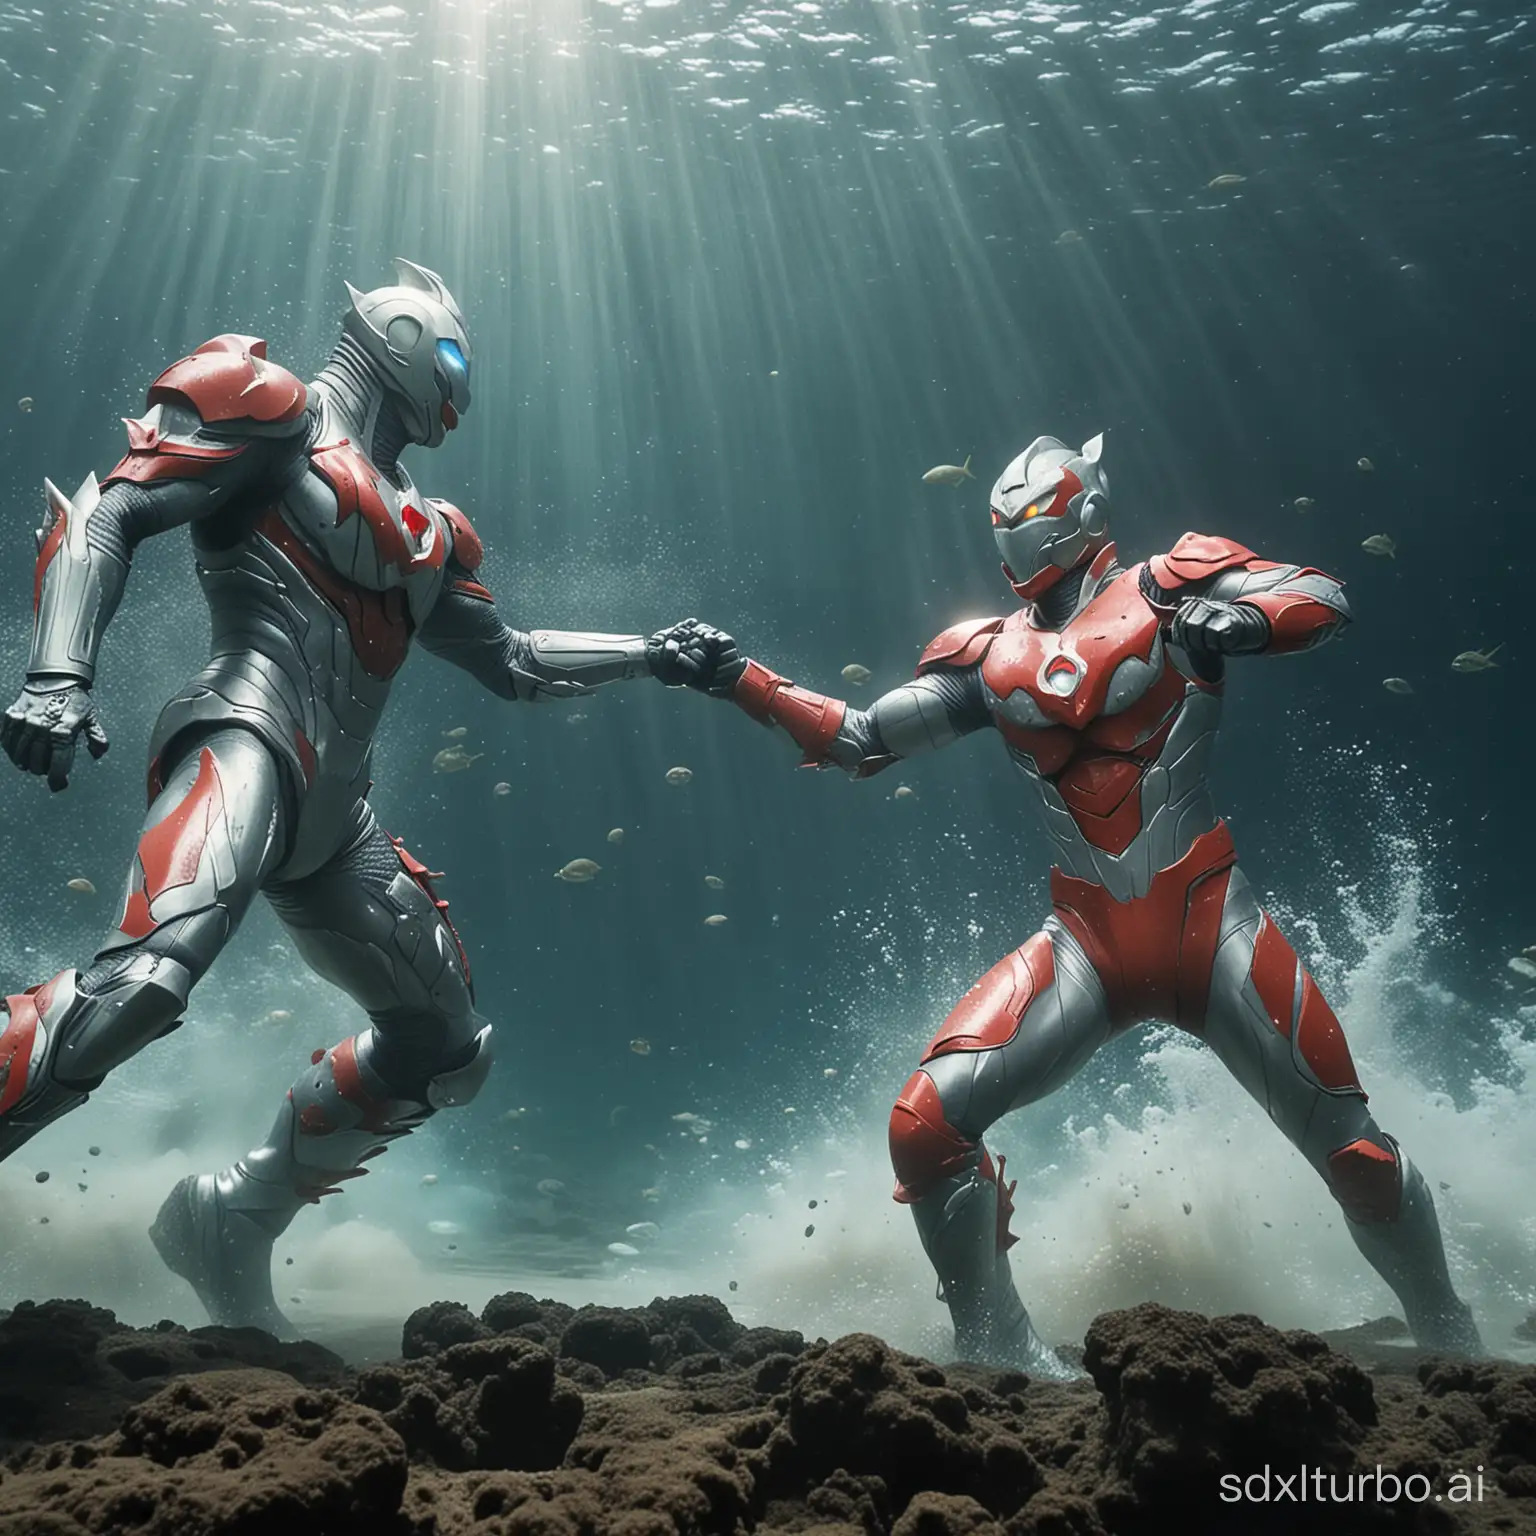 Under the sea, Ultraman and Ledi fight